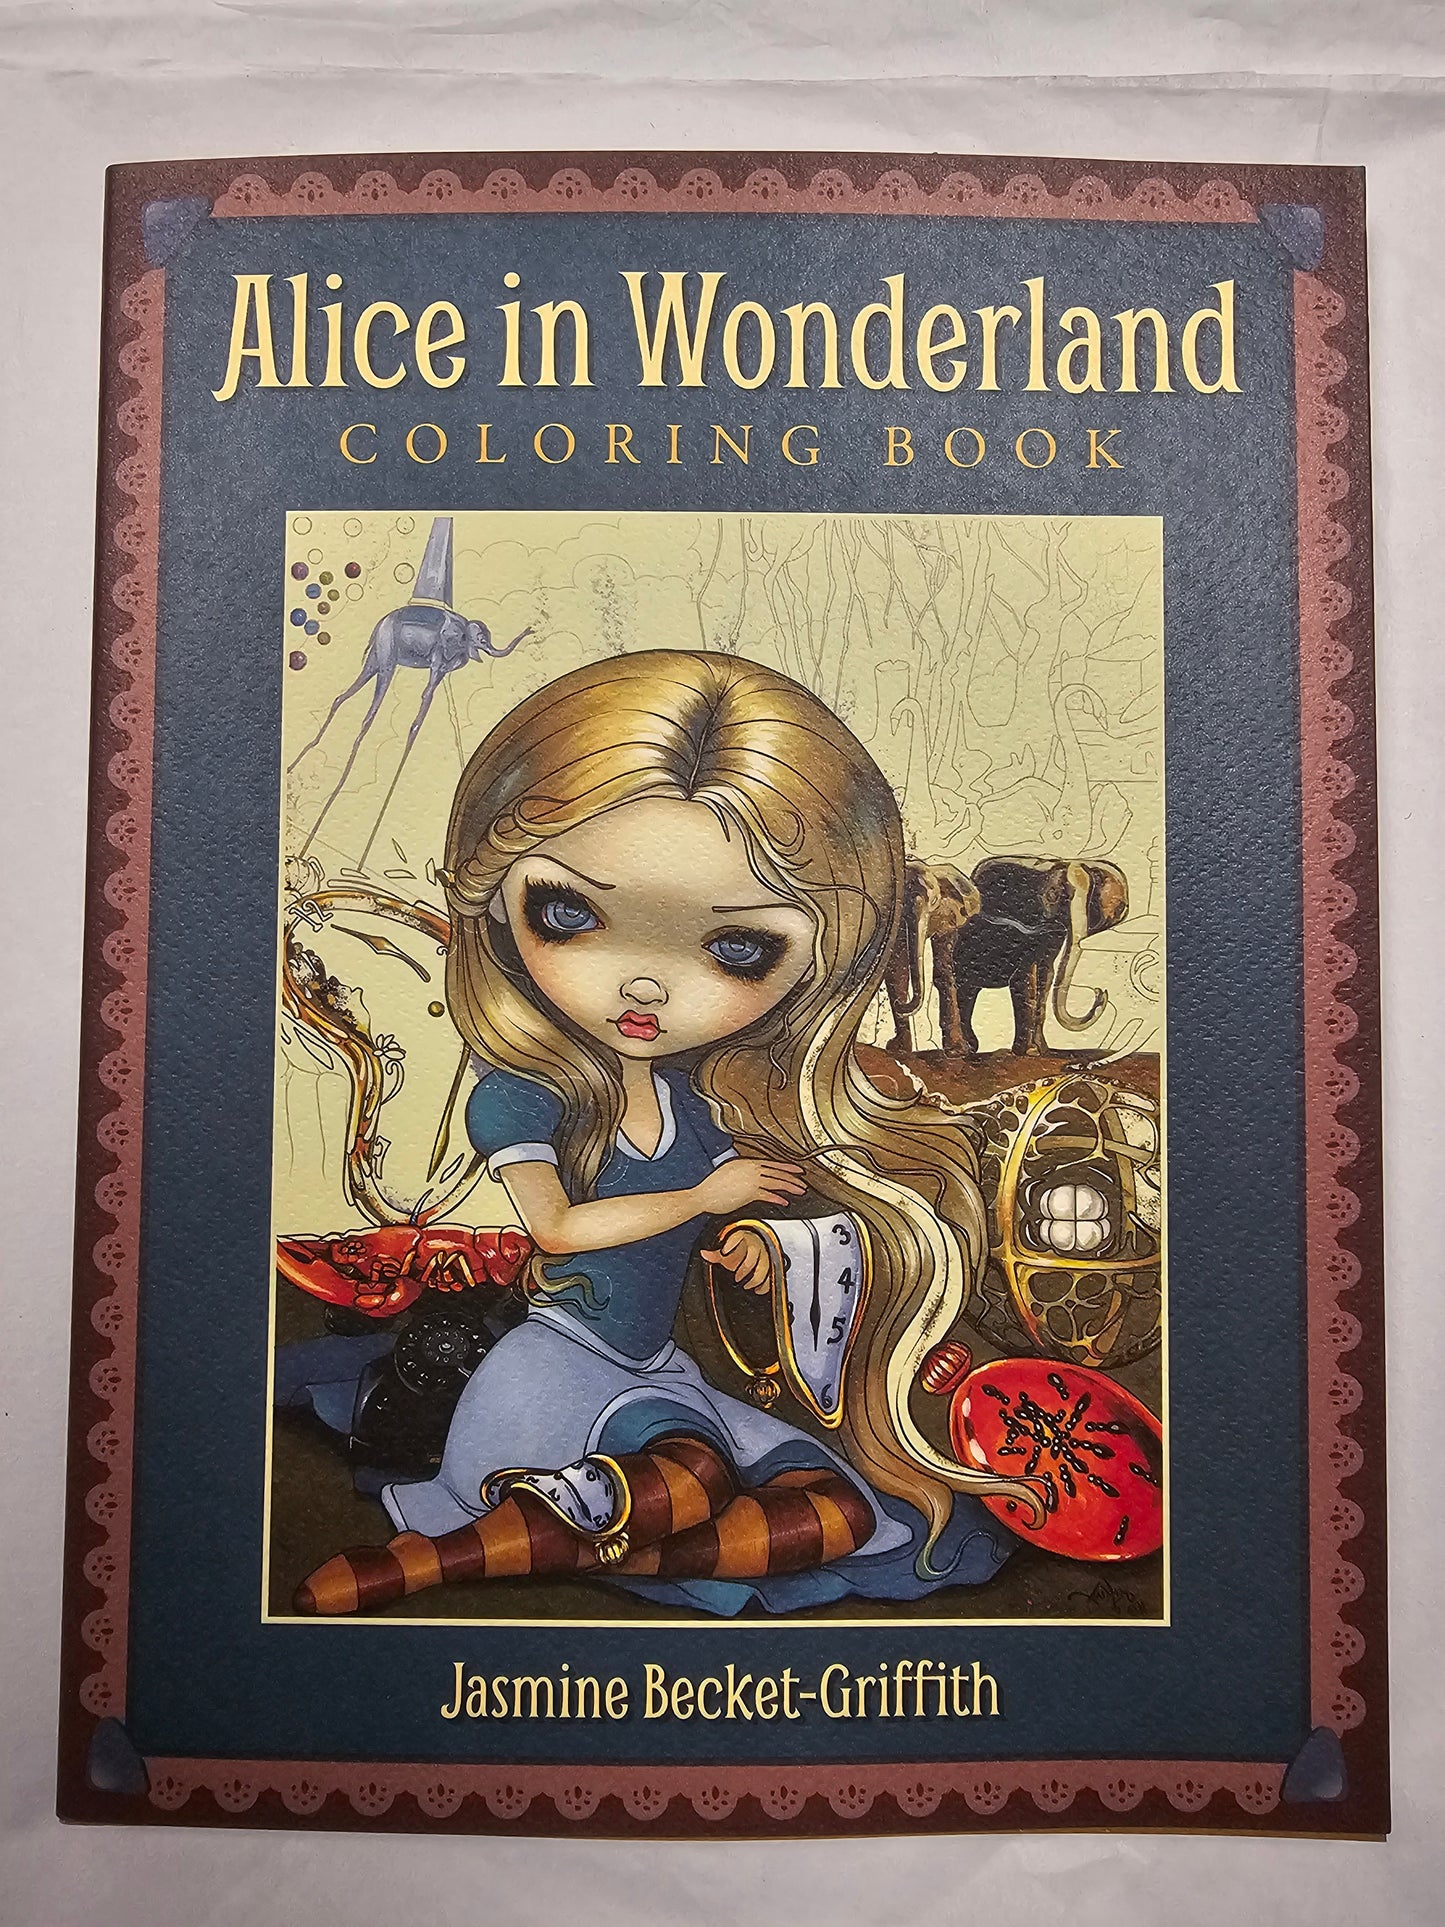 Alice in Wonderland colouring book